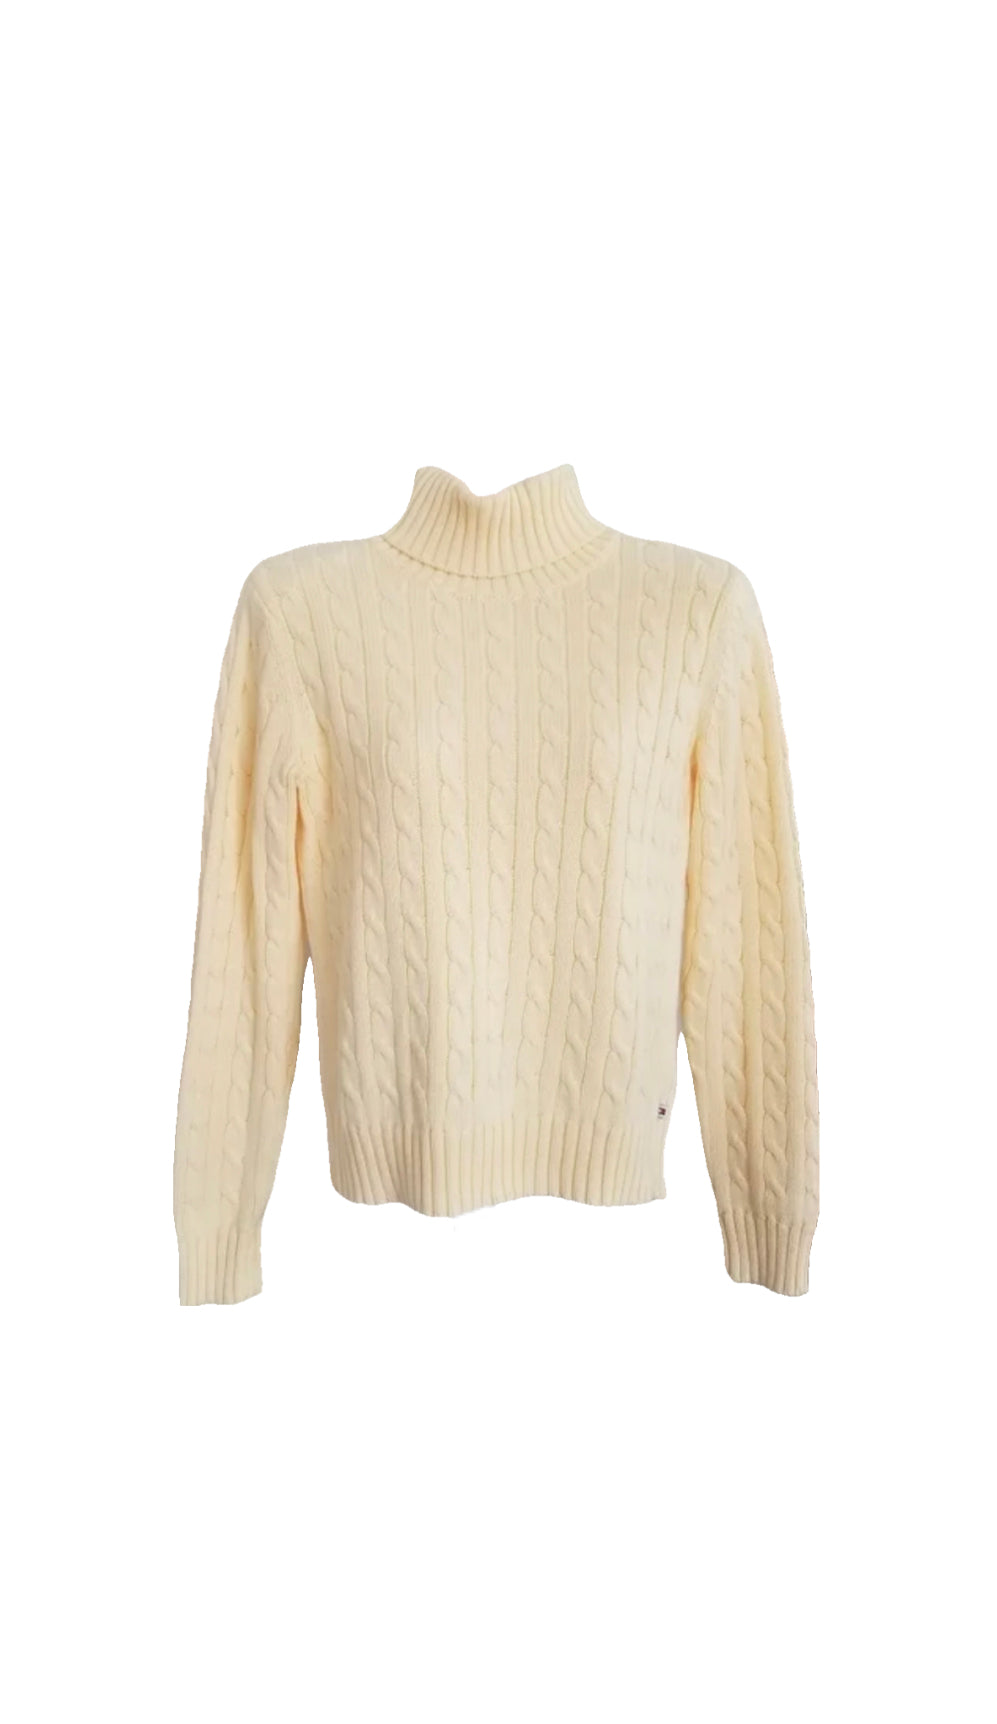 Tommy Hilfiger vintage knit woollen turtleneck jumper sweater pale yellow 